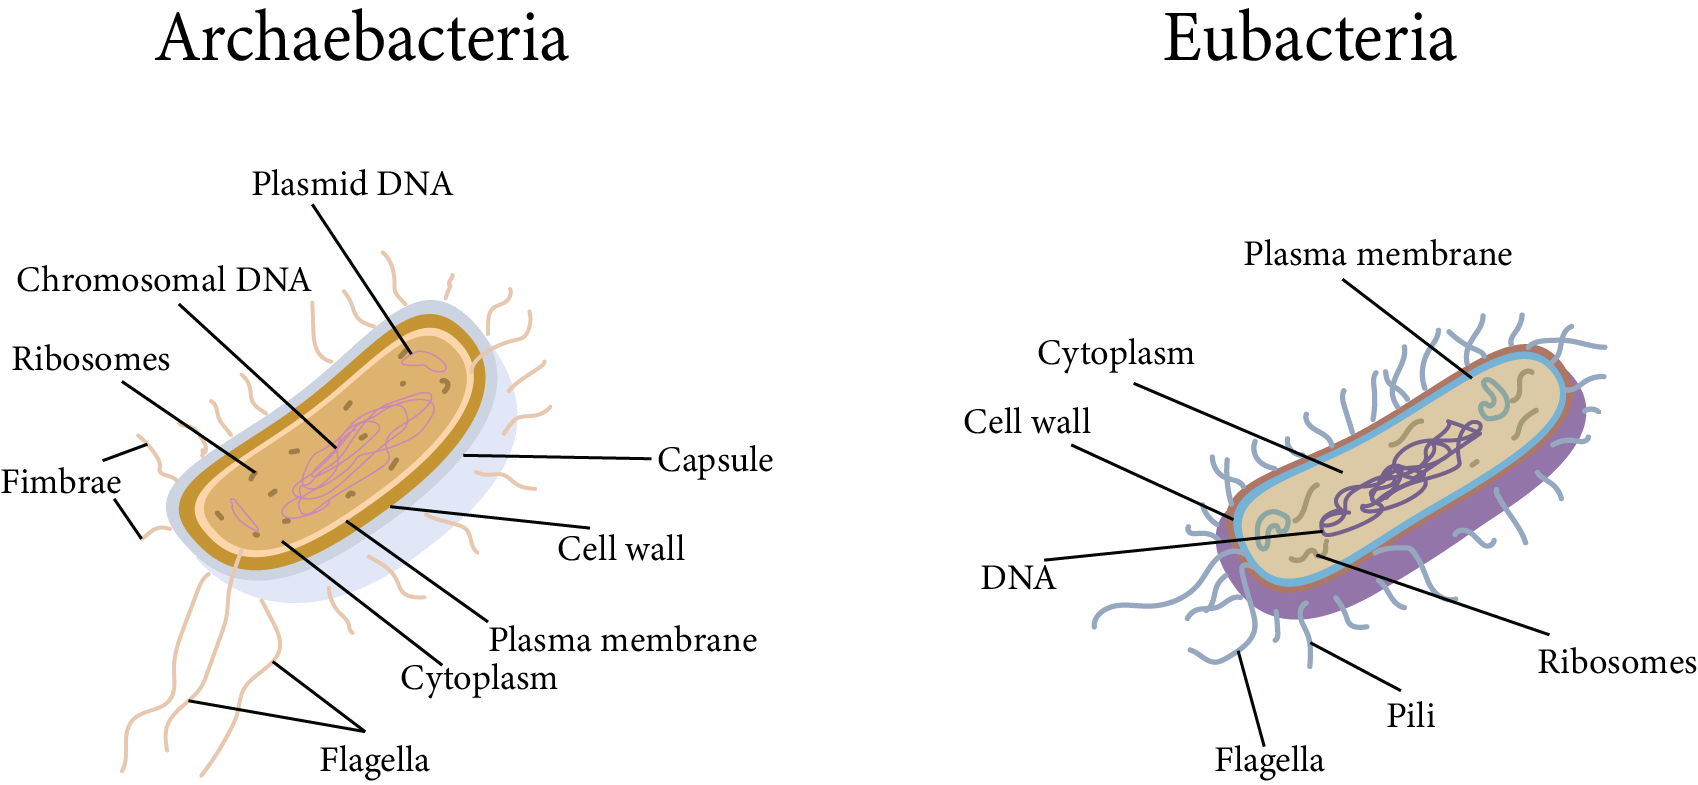 Archaebacteria and Eubacteria